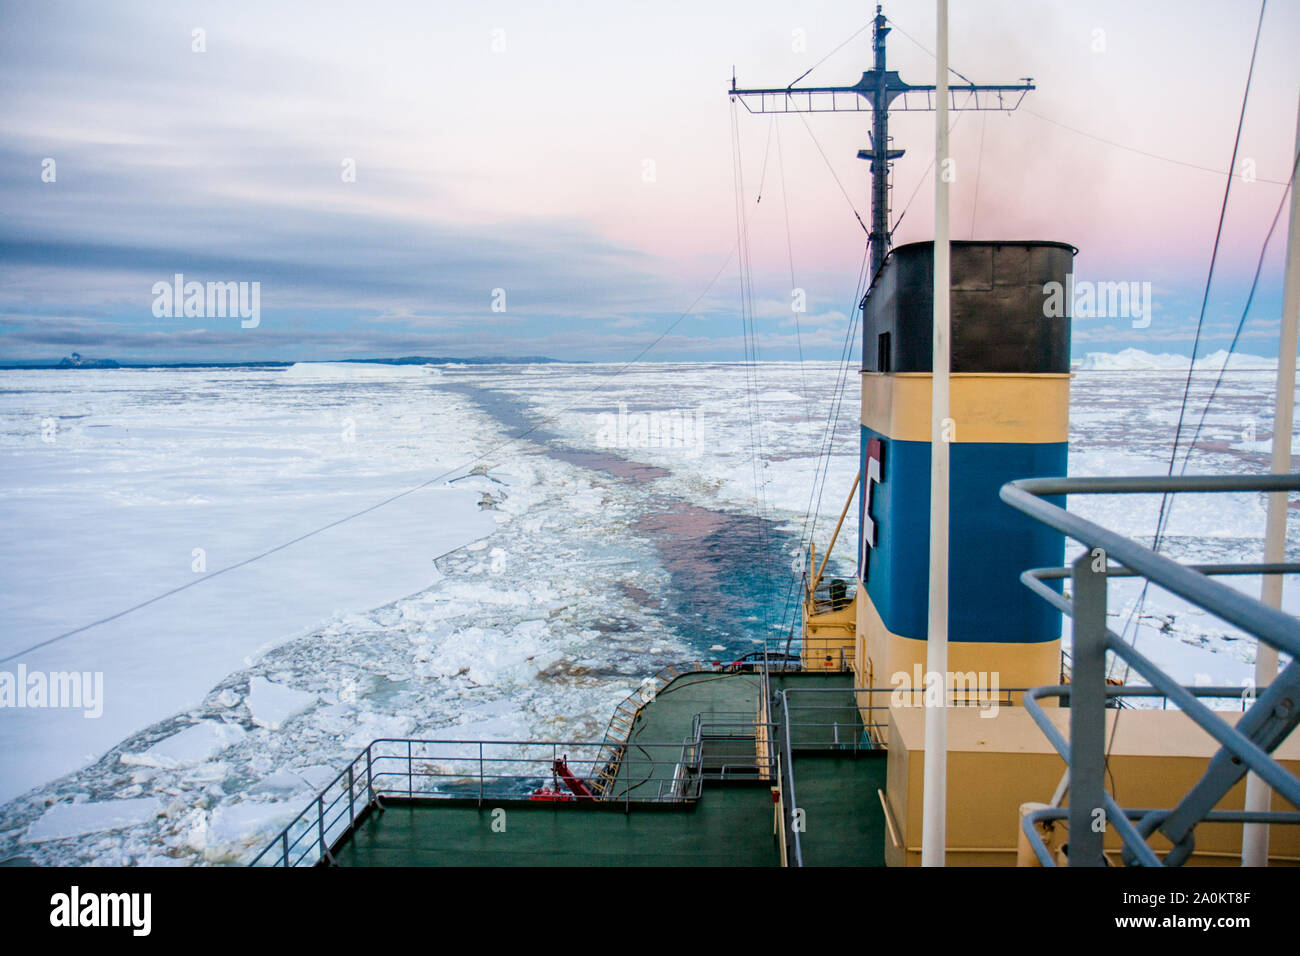 Icebreaker Kapitan Khlebnikov forging a path through the sea ice in the Weddell Sea, Antarctica Stock Photo